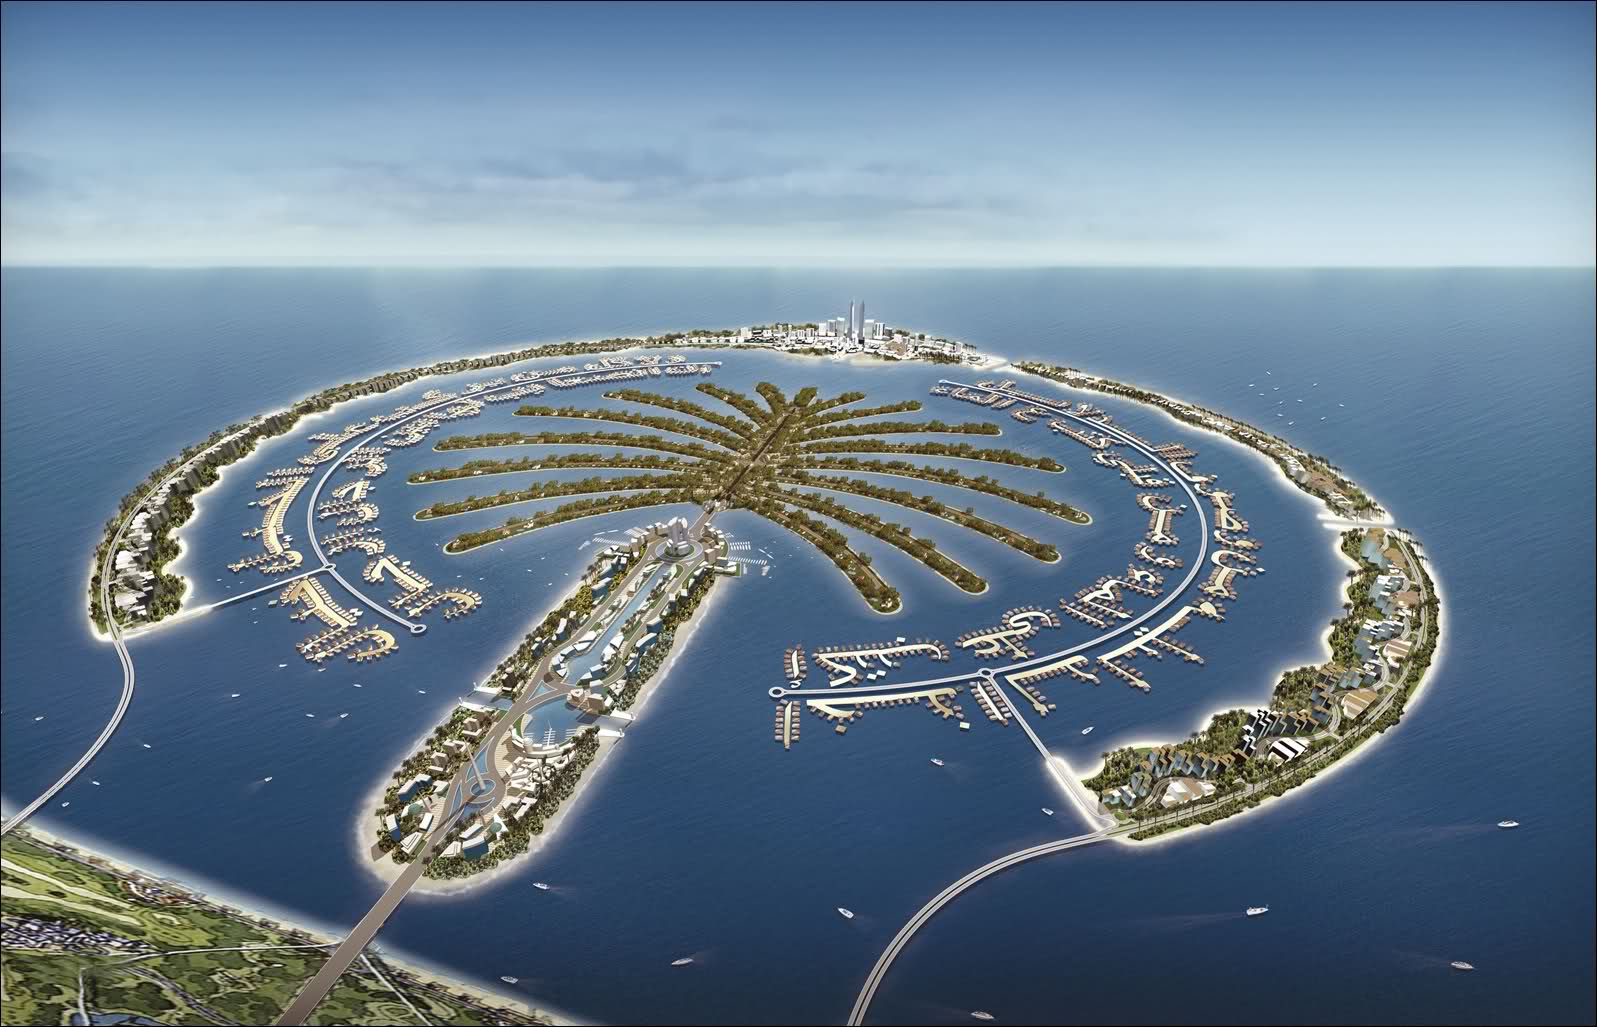 Structure in Dubai: Palm Jebel Ali